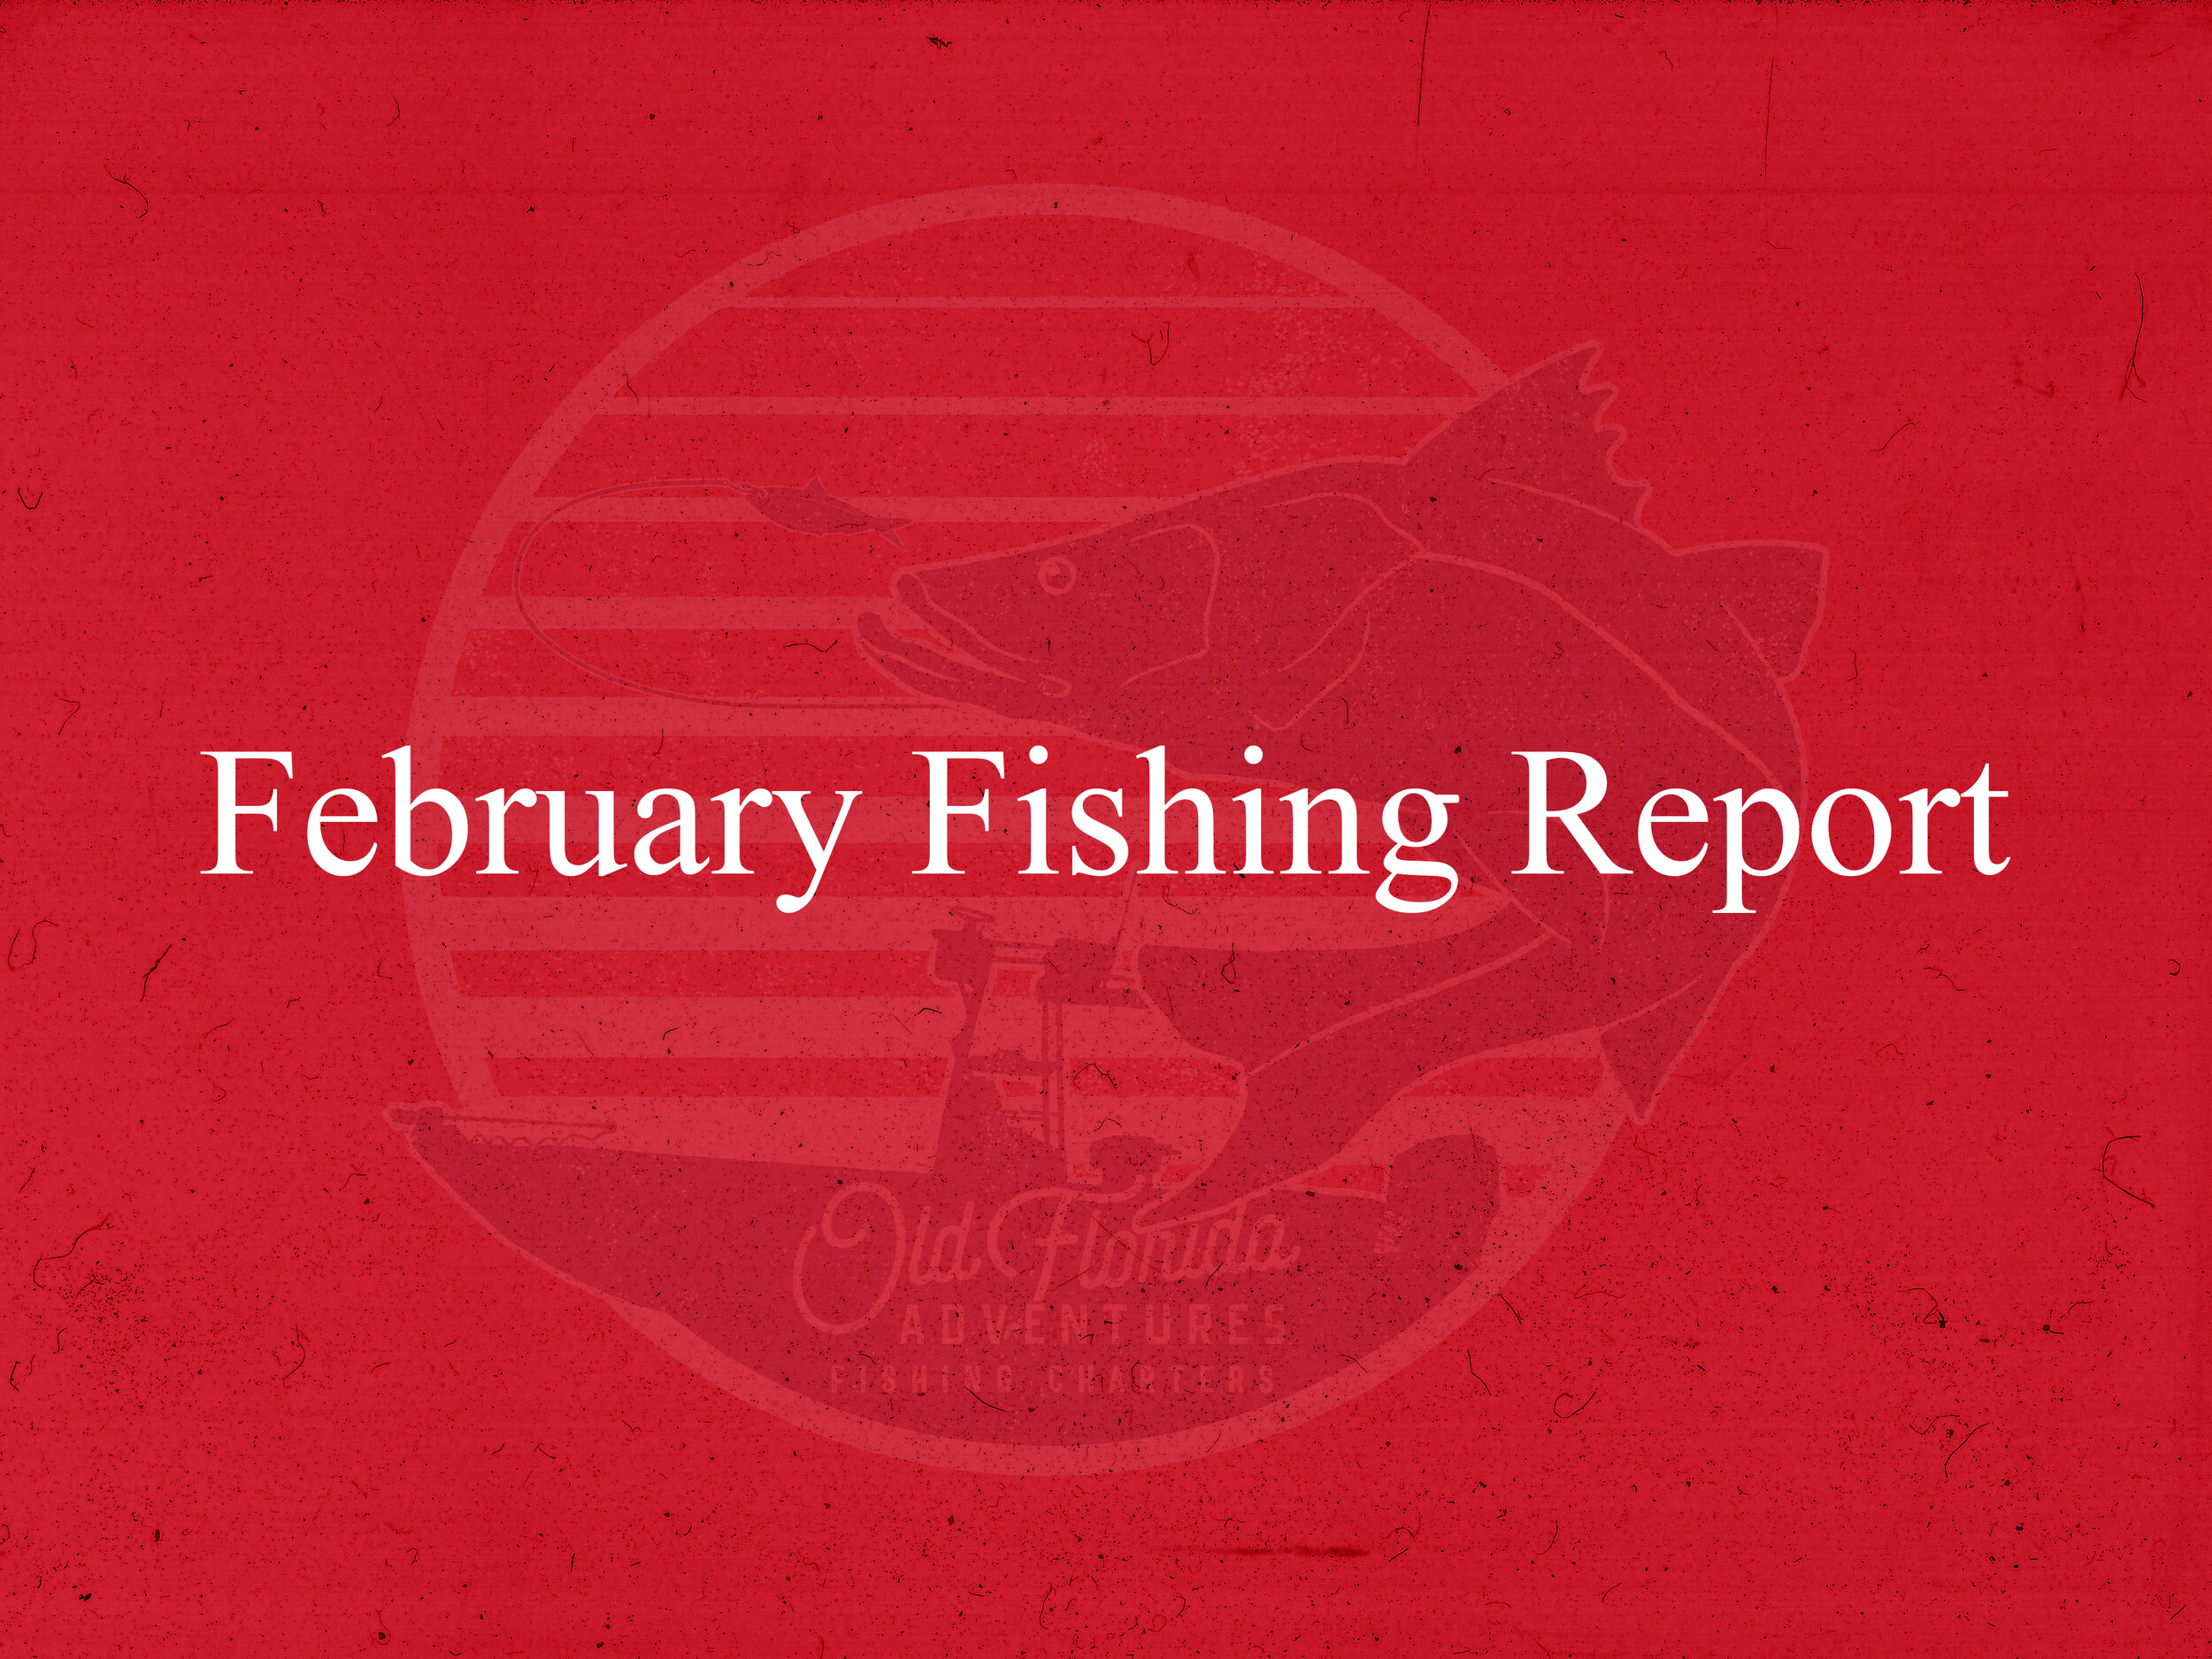 February Fishing Report.jpg